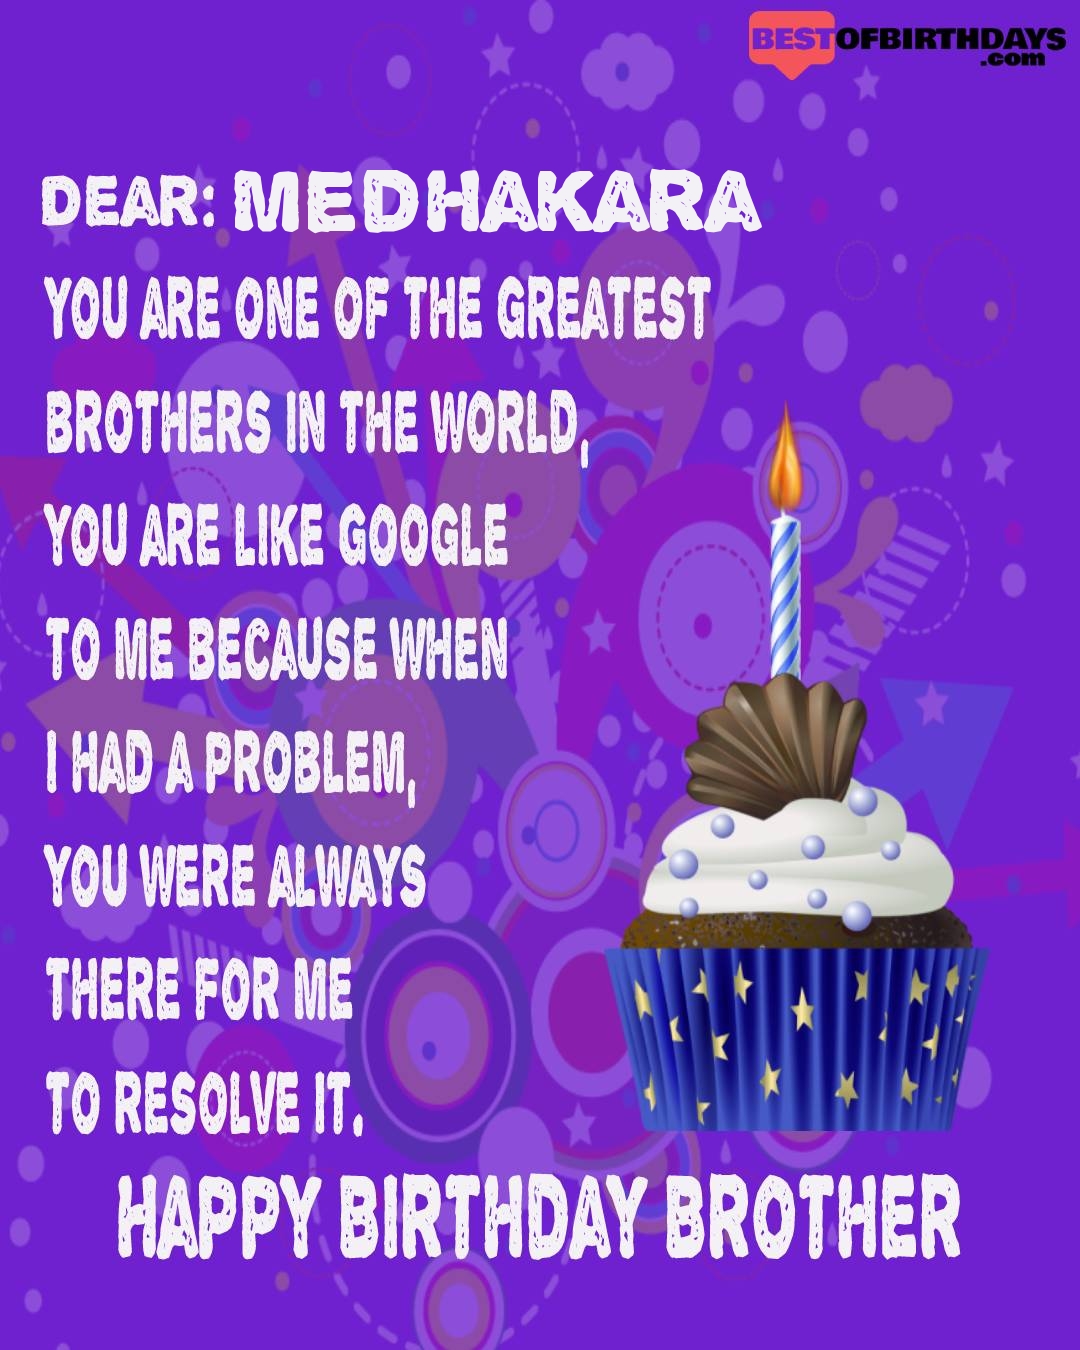 Happy birthday medhakara bhai brother bro